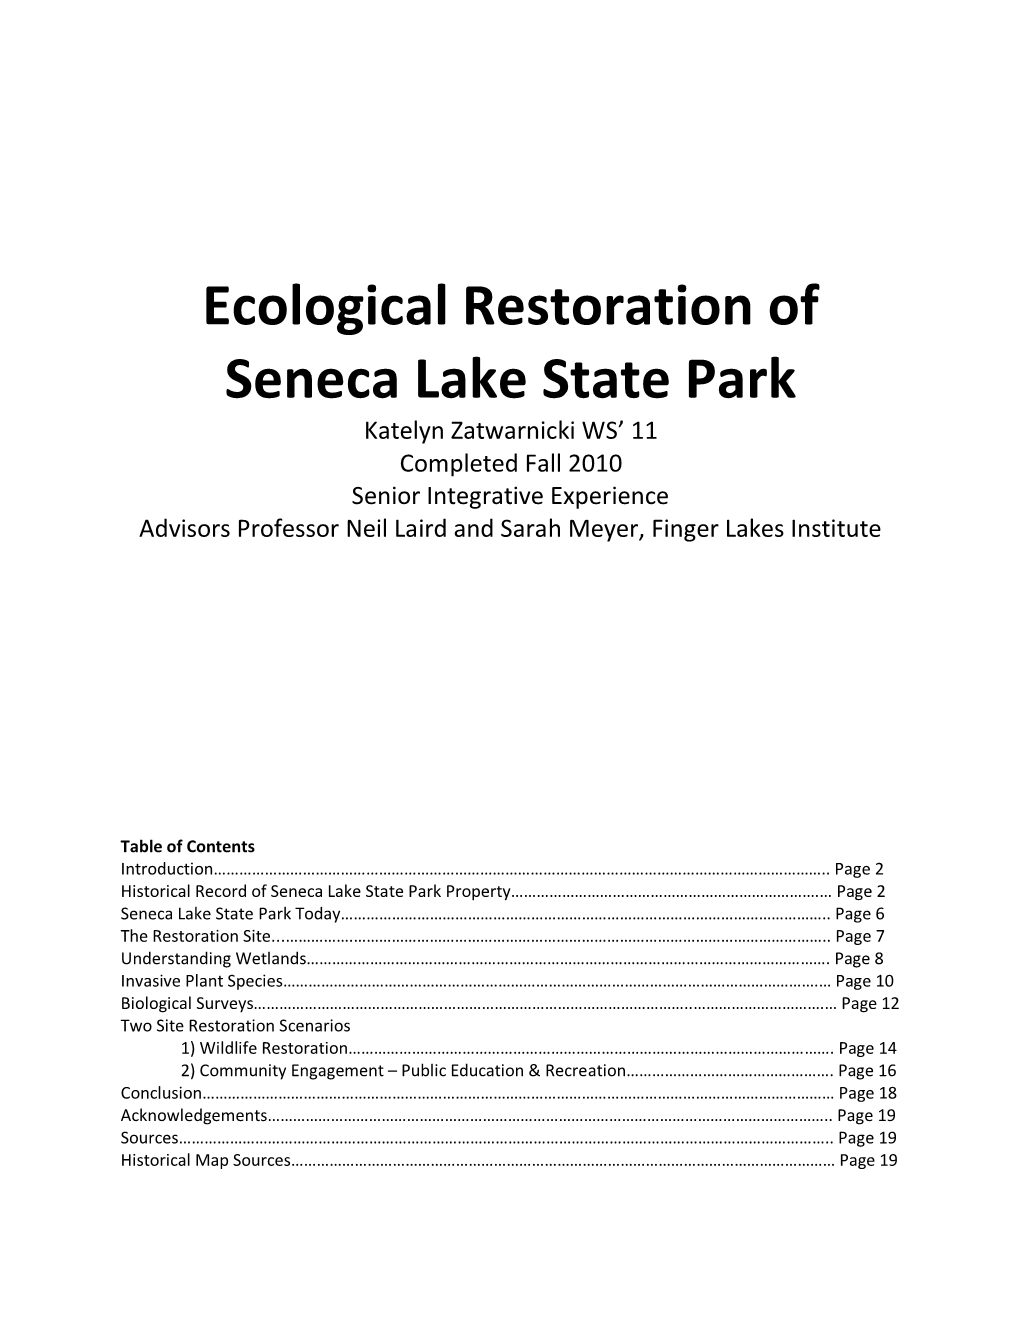 Ecological Restoration of Seneca